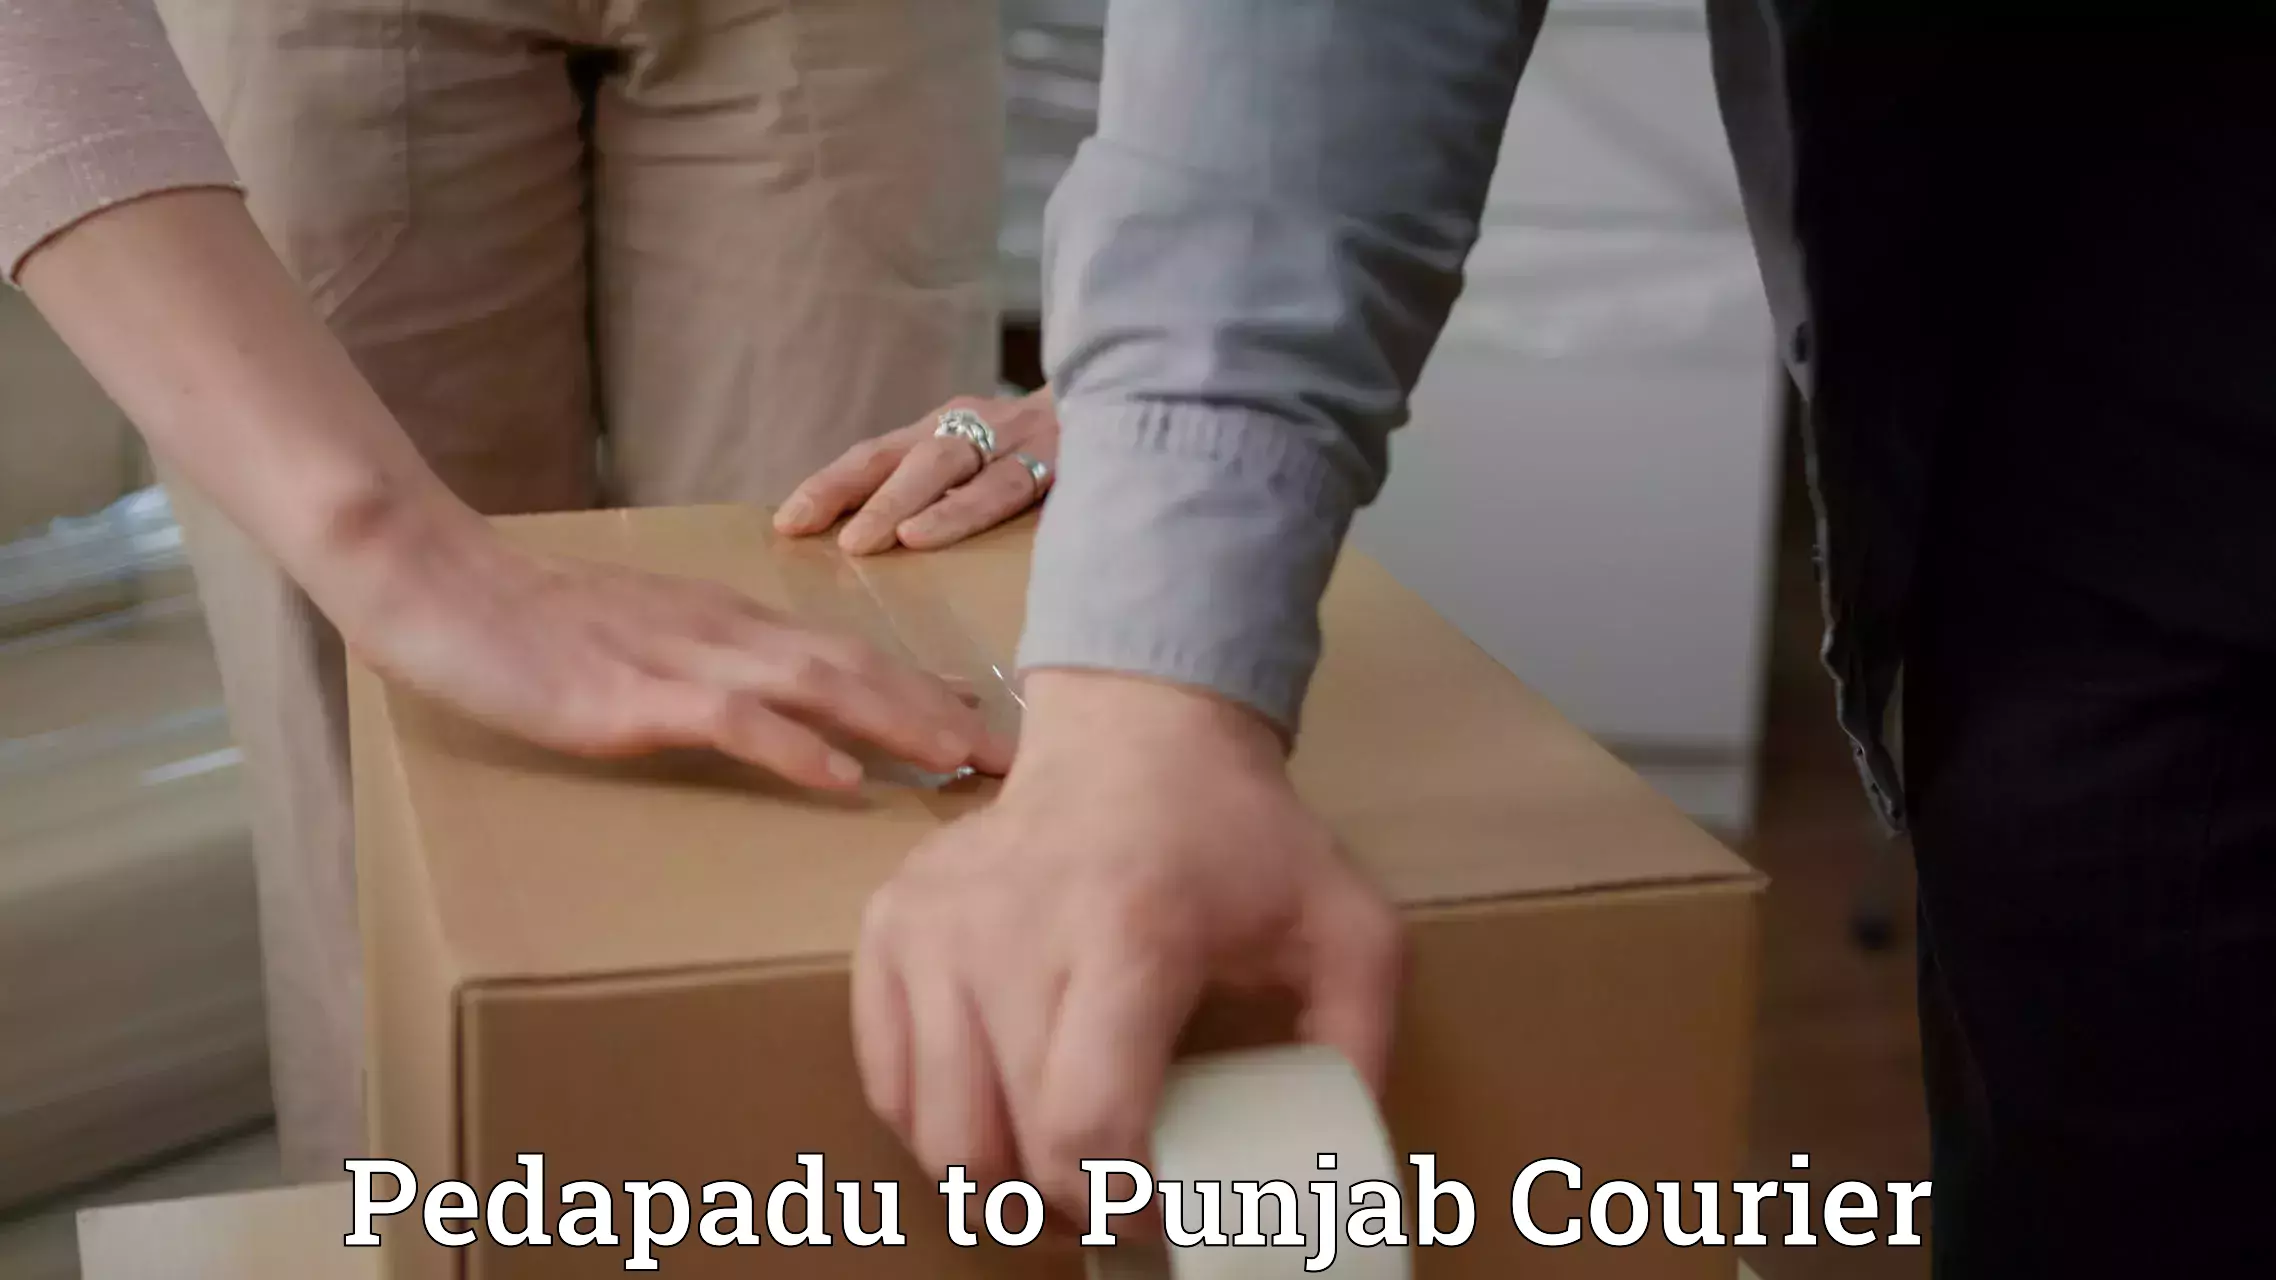 Urban courier service Pedapadu to Punjab